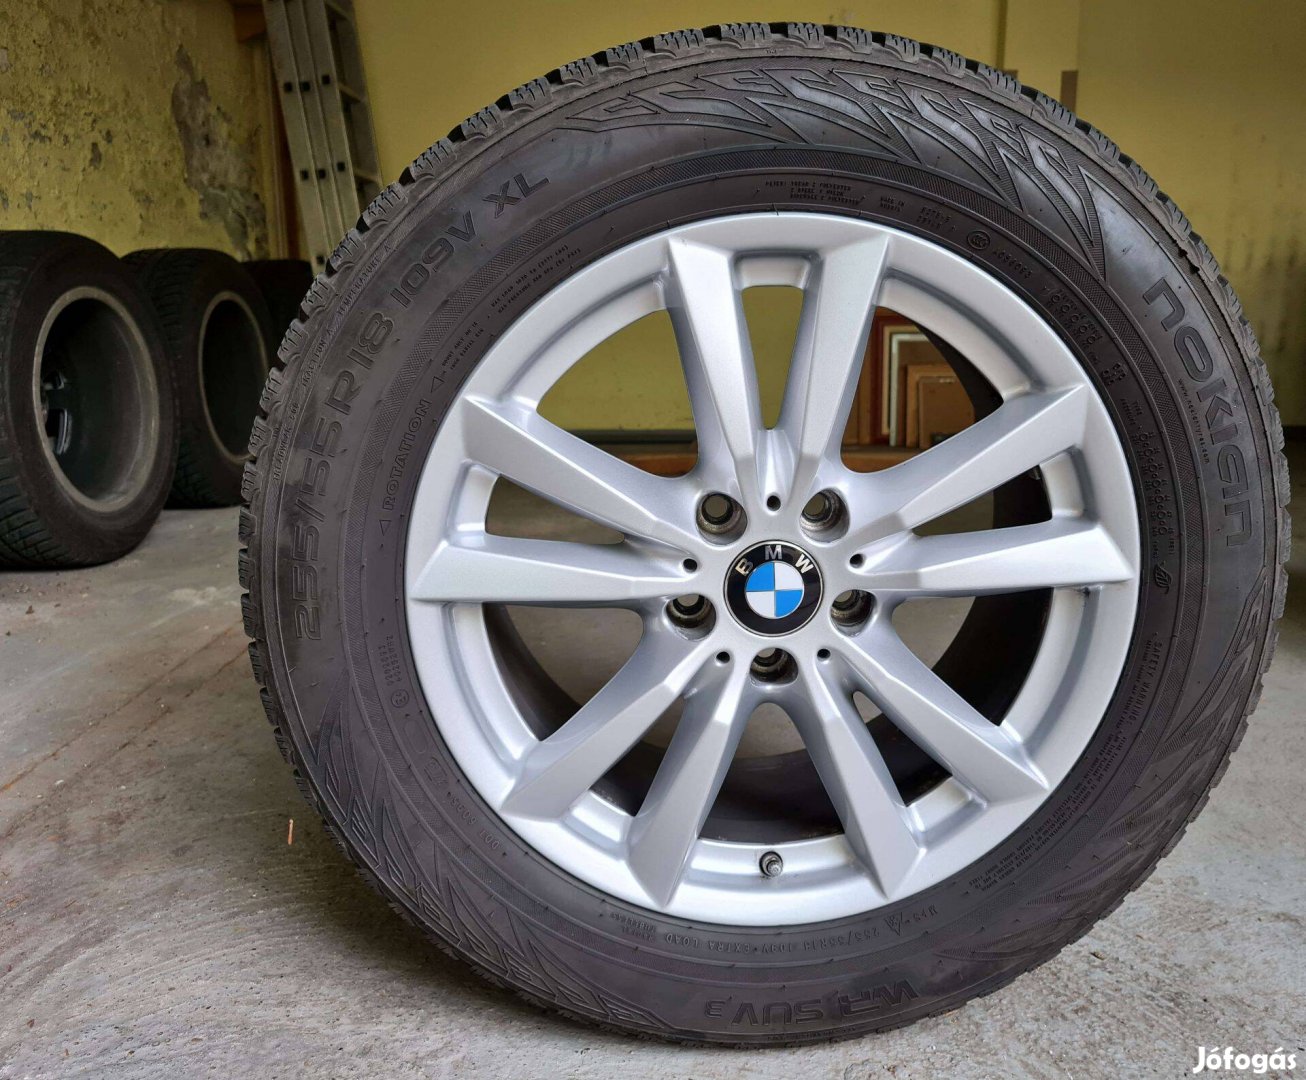 BMW felni alufelni 18 -as, 255/55 R18 Nokian Wrsuv téli gumikkal eladó